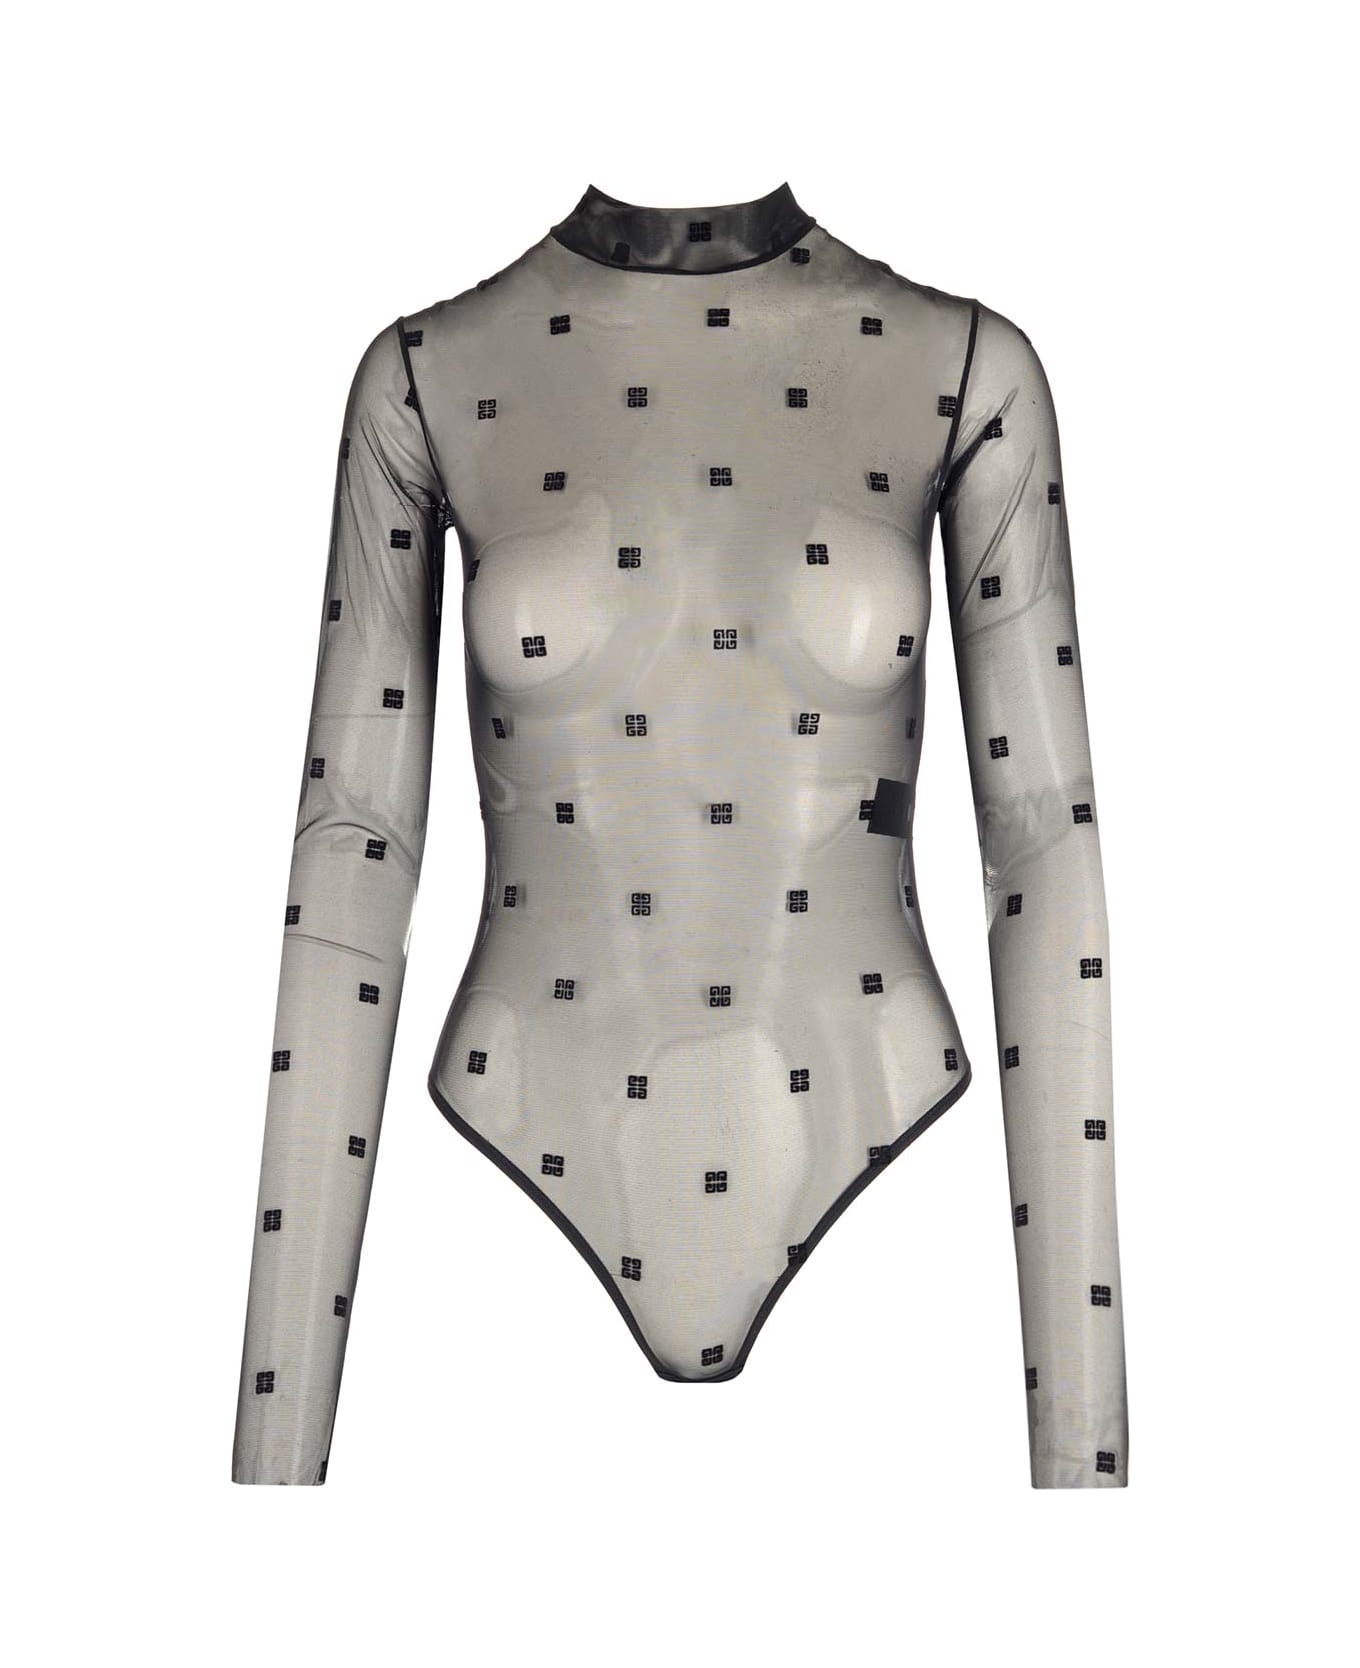 Givenchy Transparent Bodysuit '$g' Motif - Black ボディスーツ